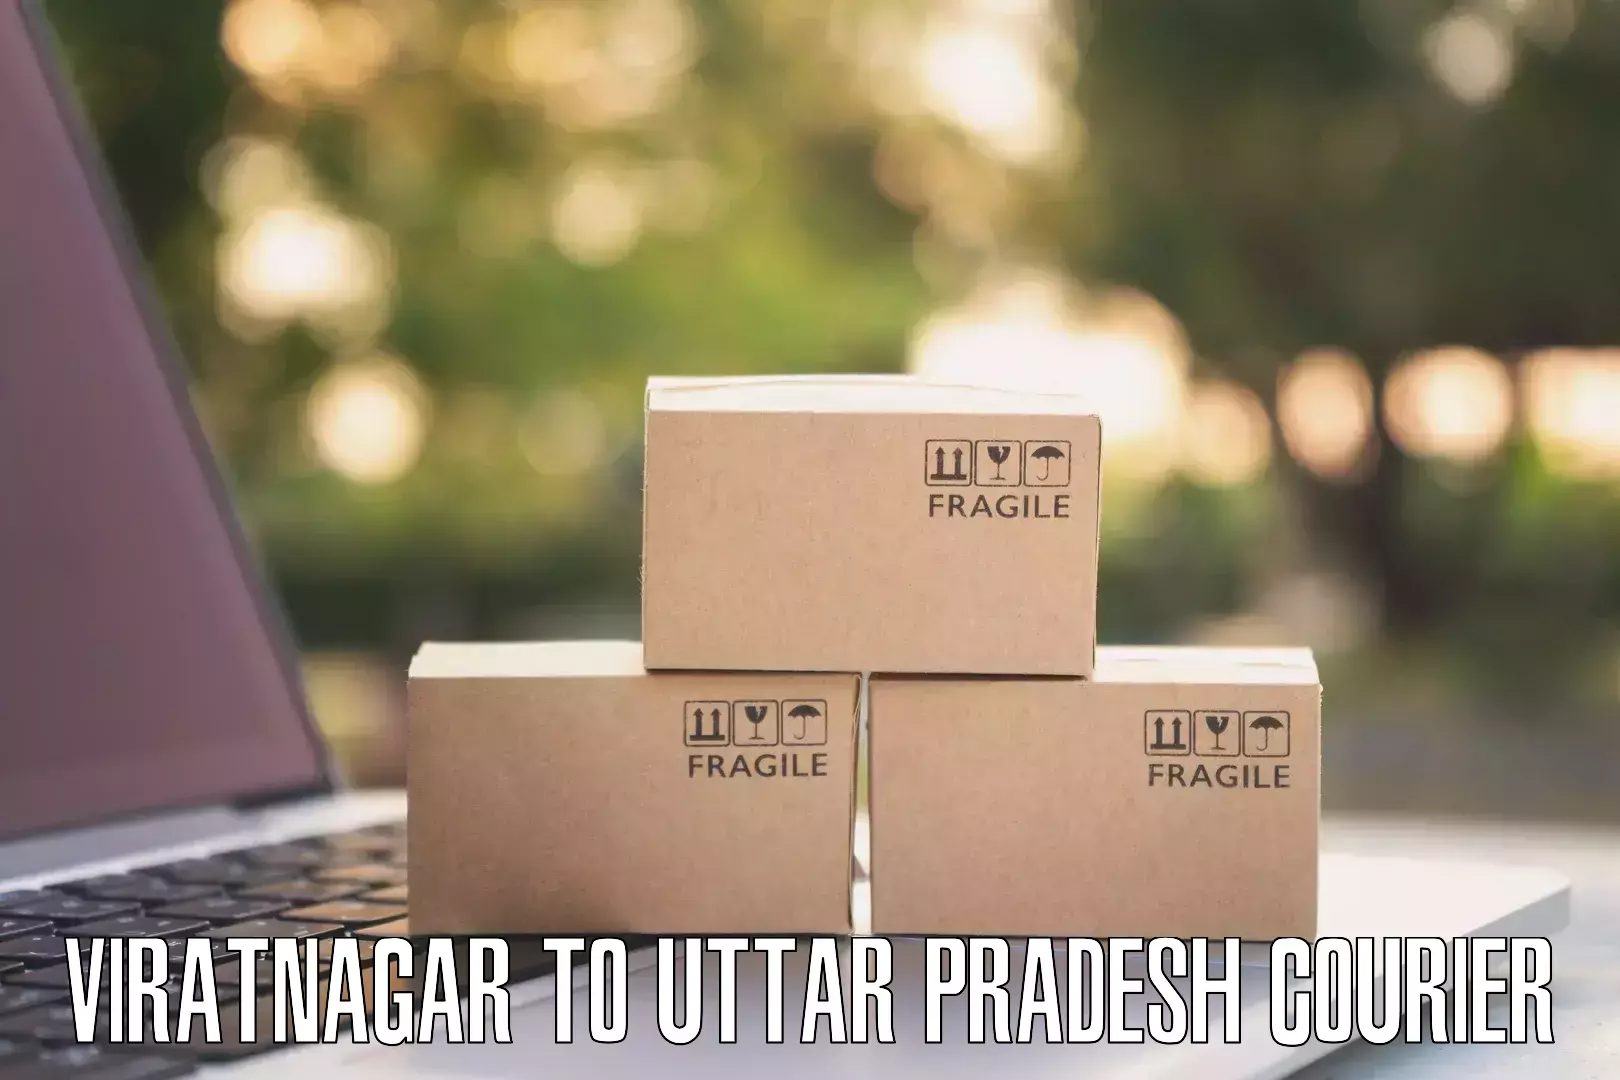 Advanced tracking systems Viratnagar to Unchahar